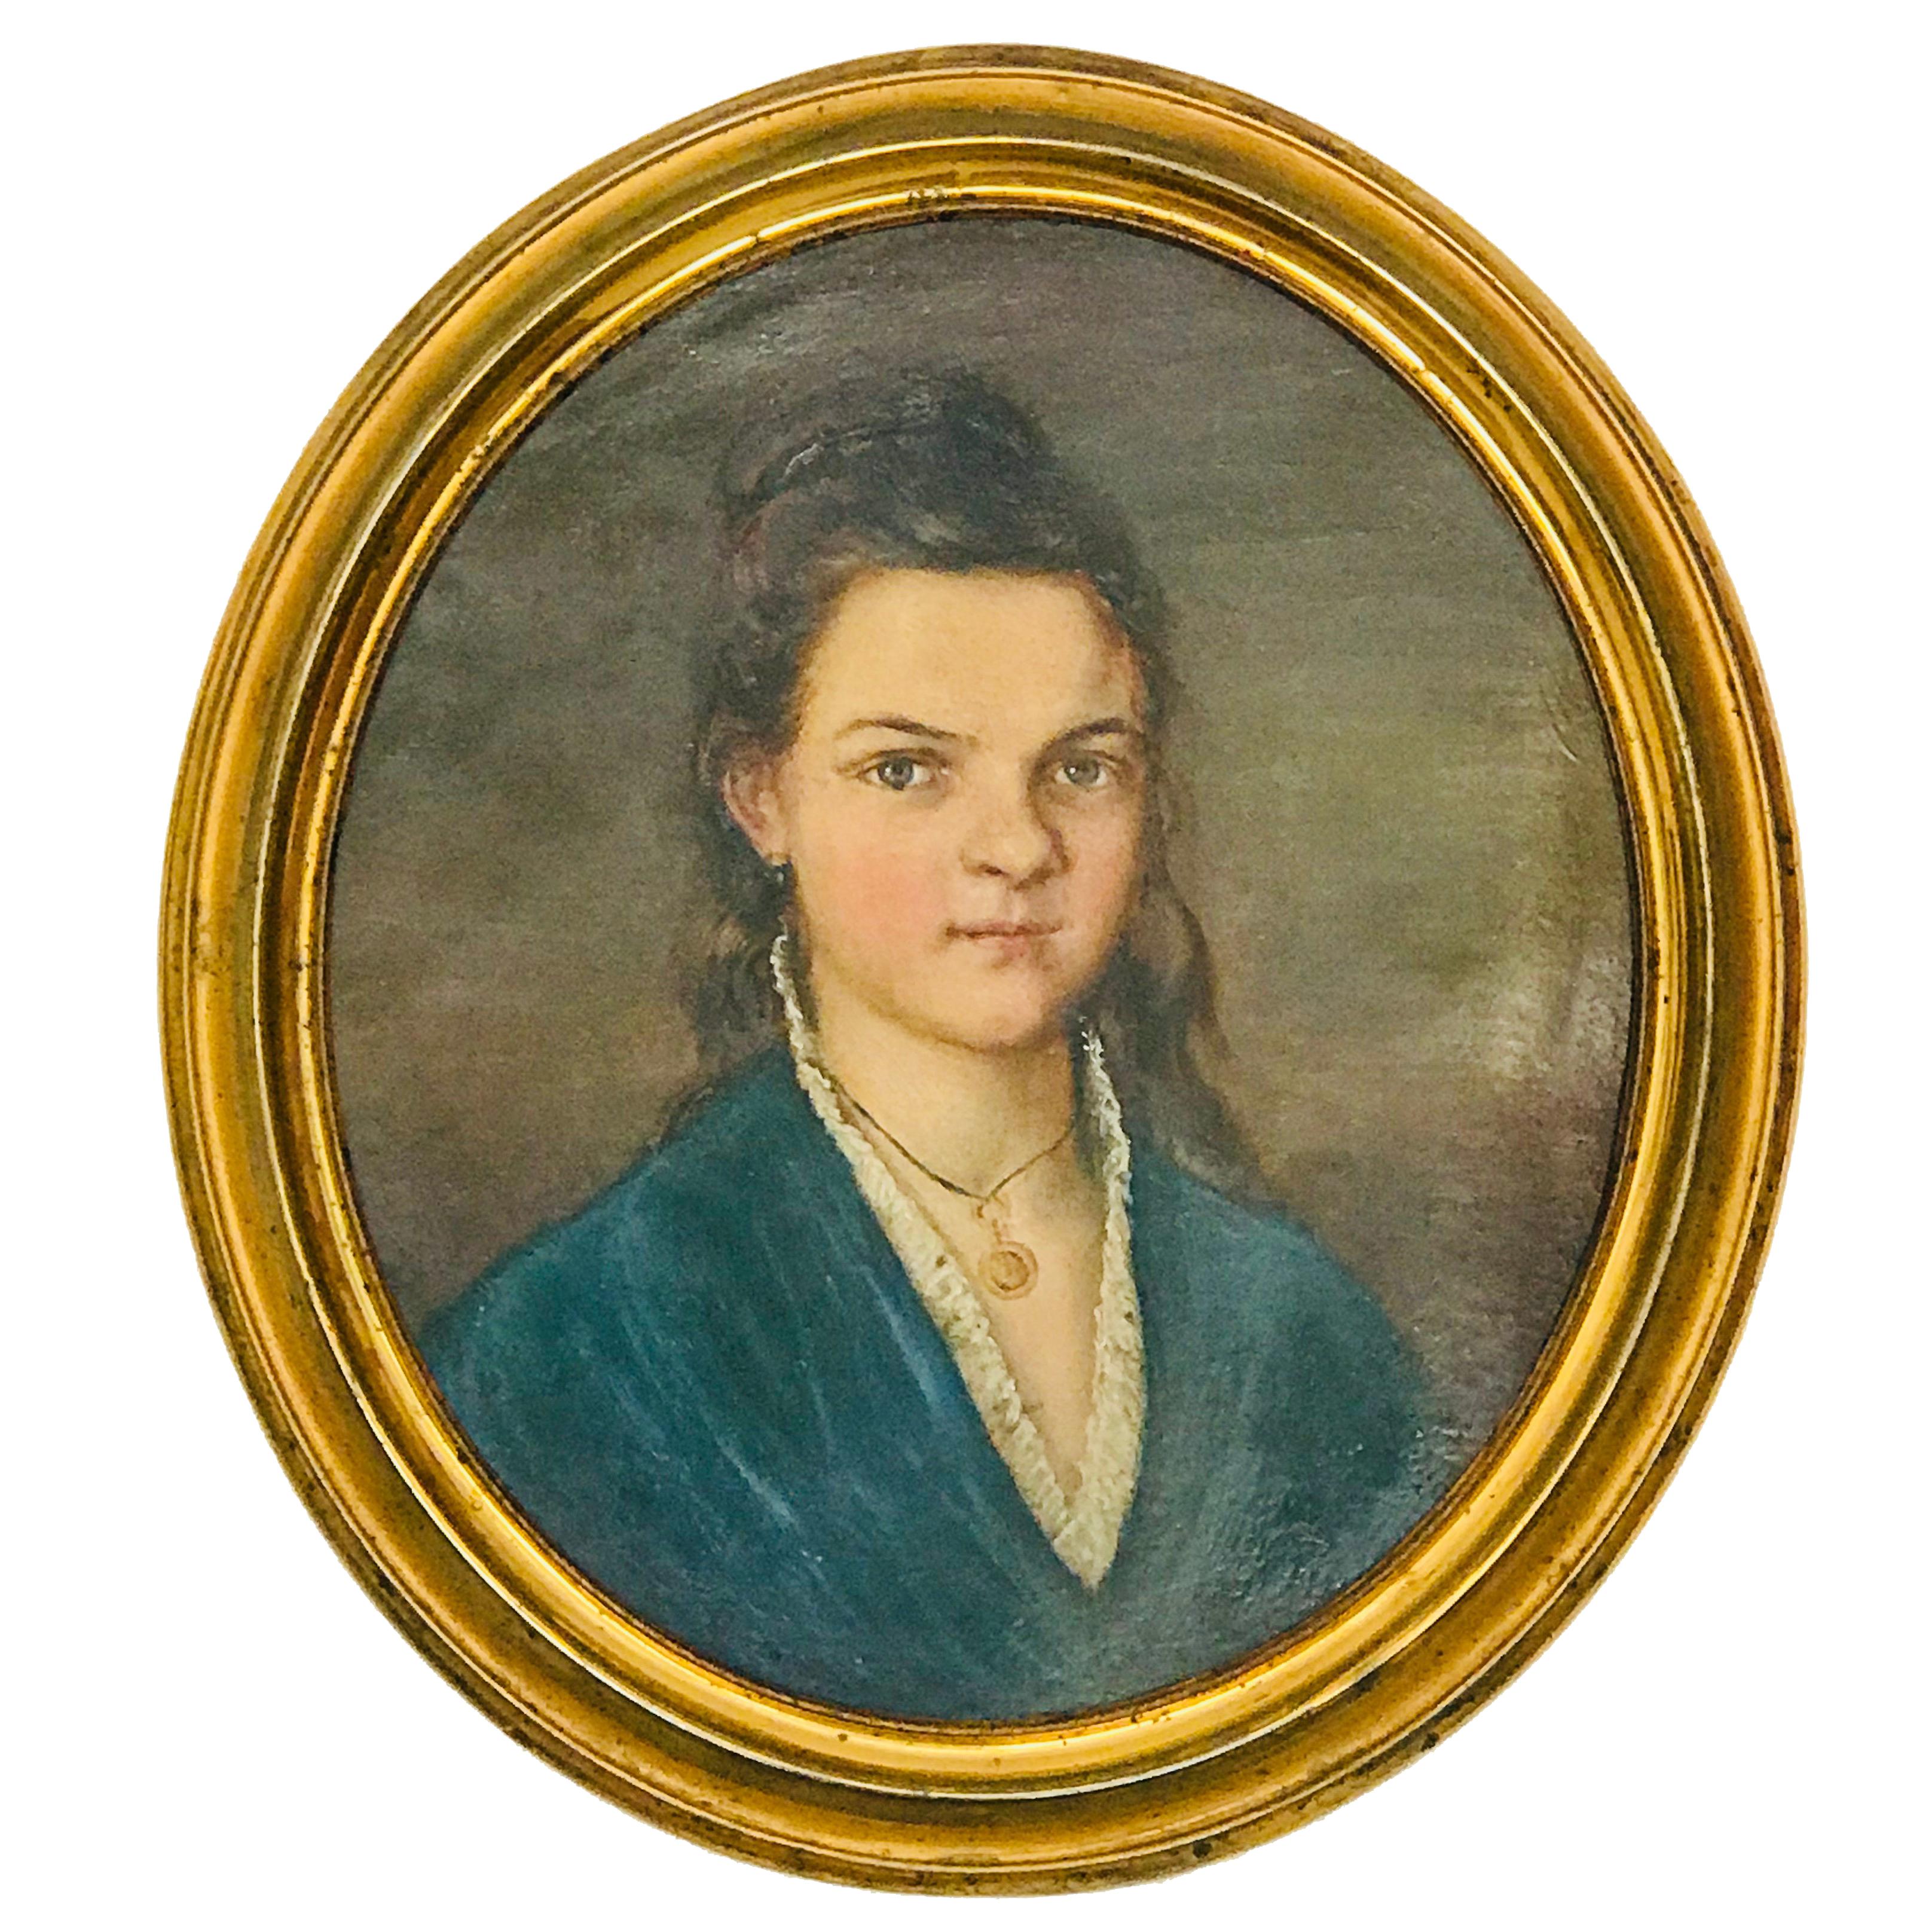 Biedermaier Portret "1840" For Sale